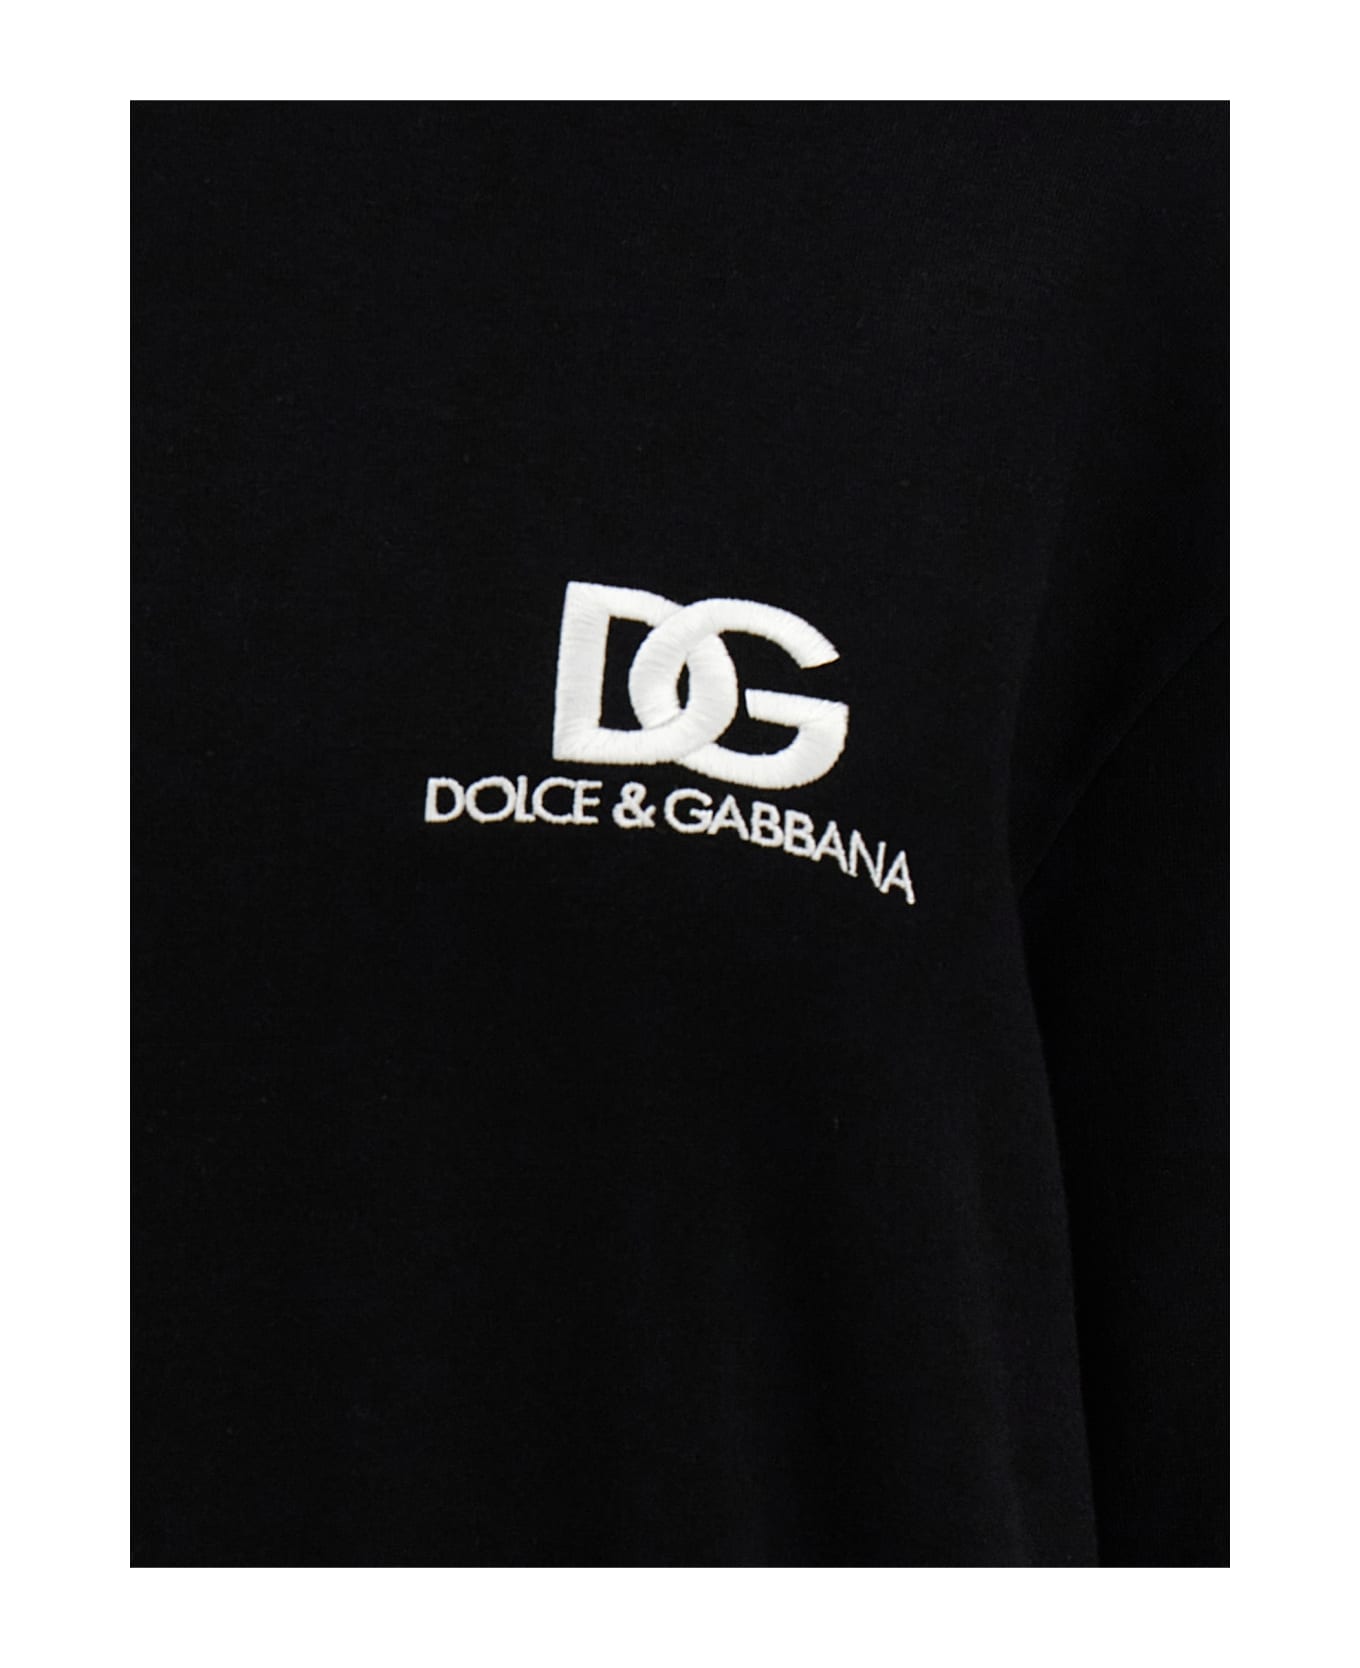 Dolce & Gabbana Sweatshirt With Logo Embroidery - White/Black フリース